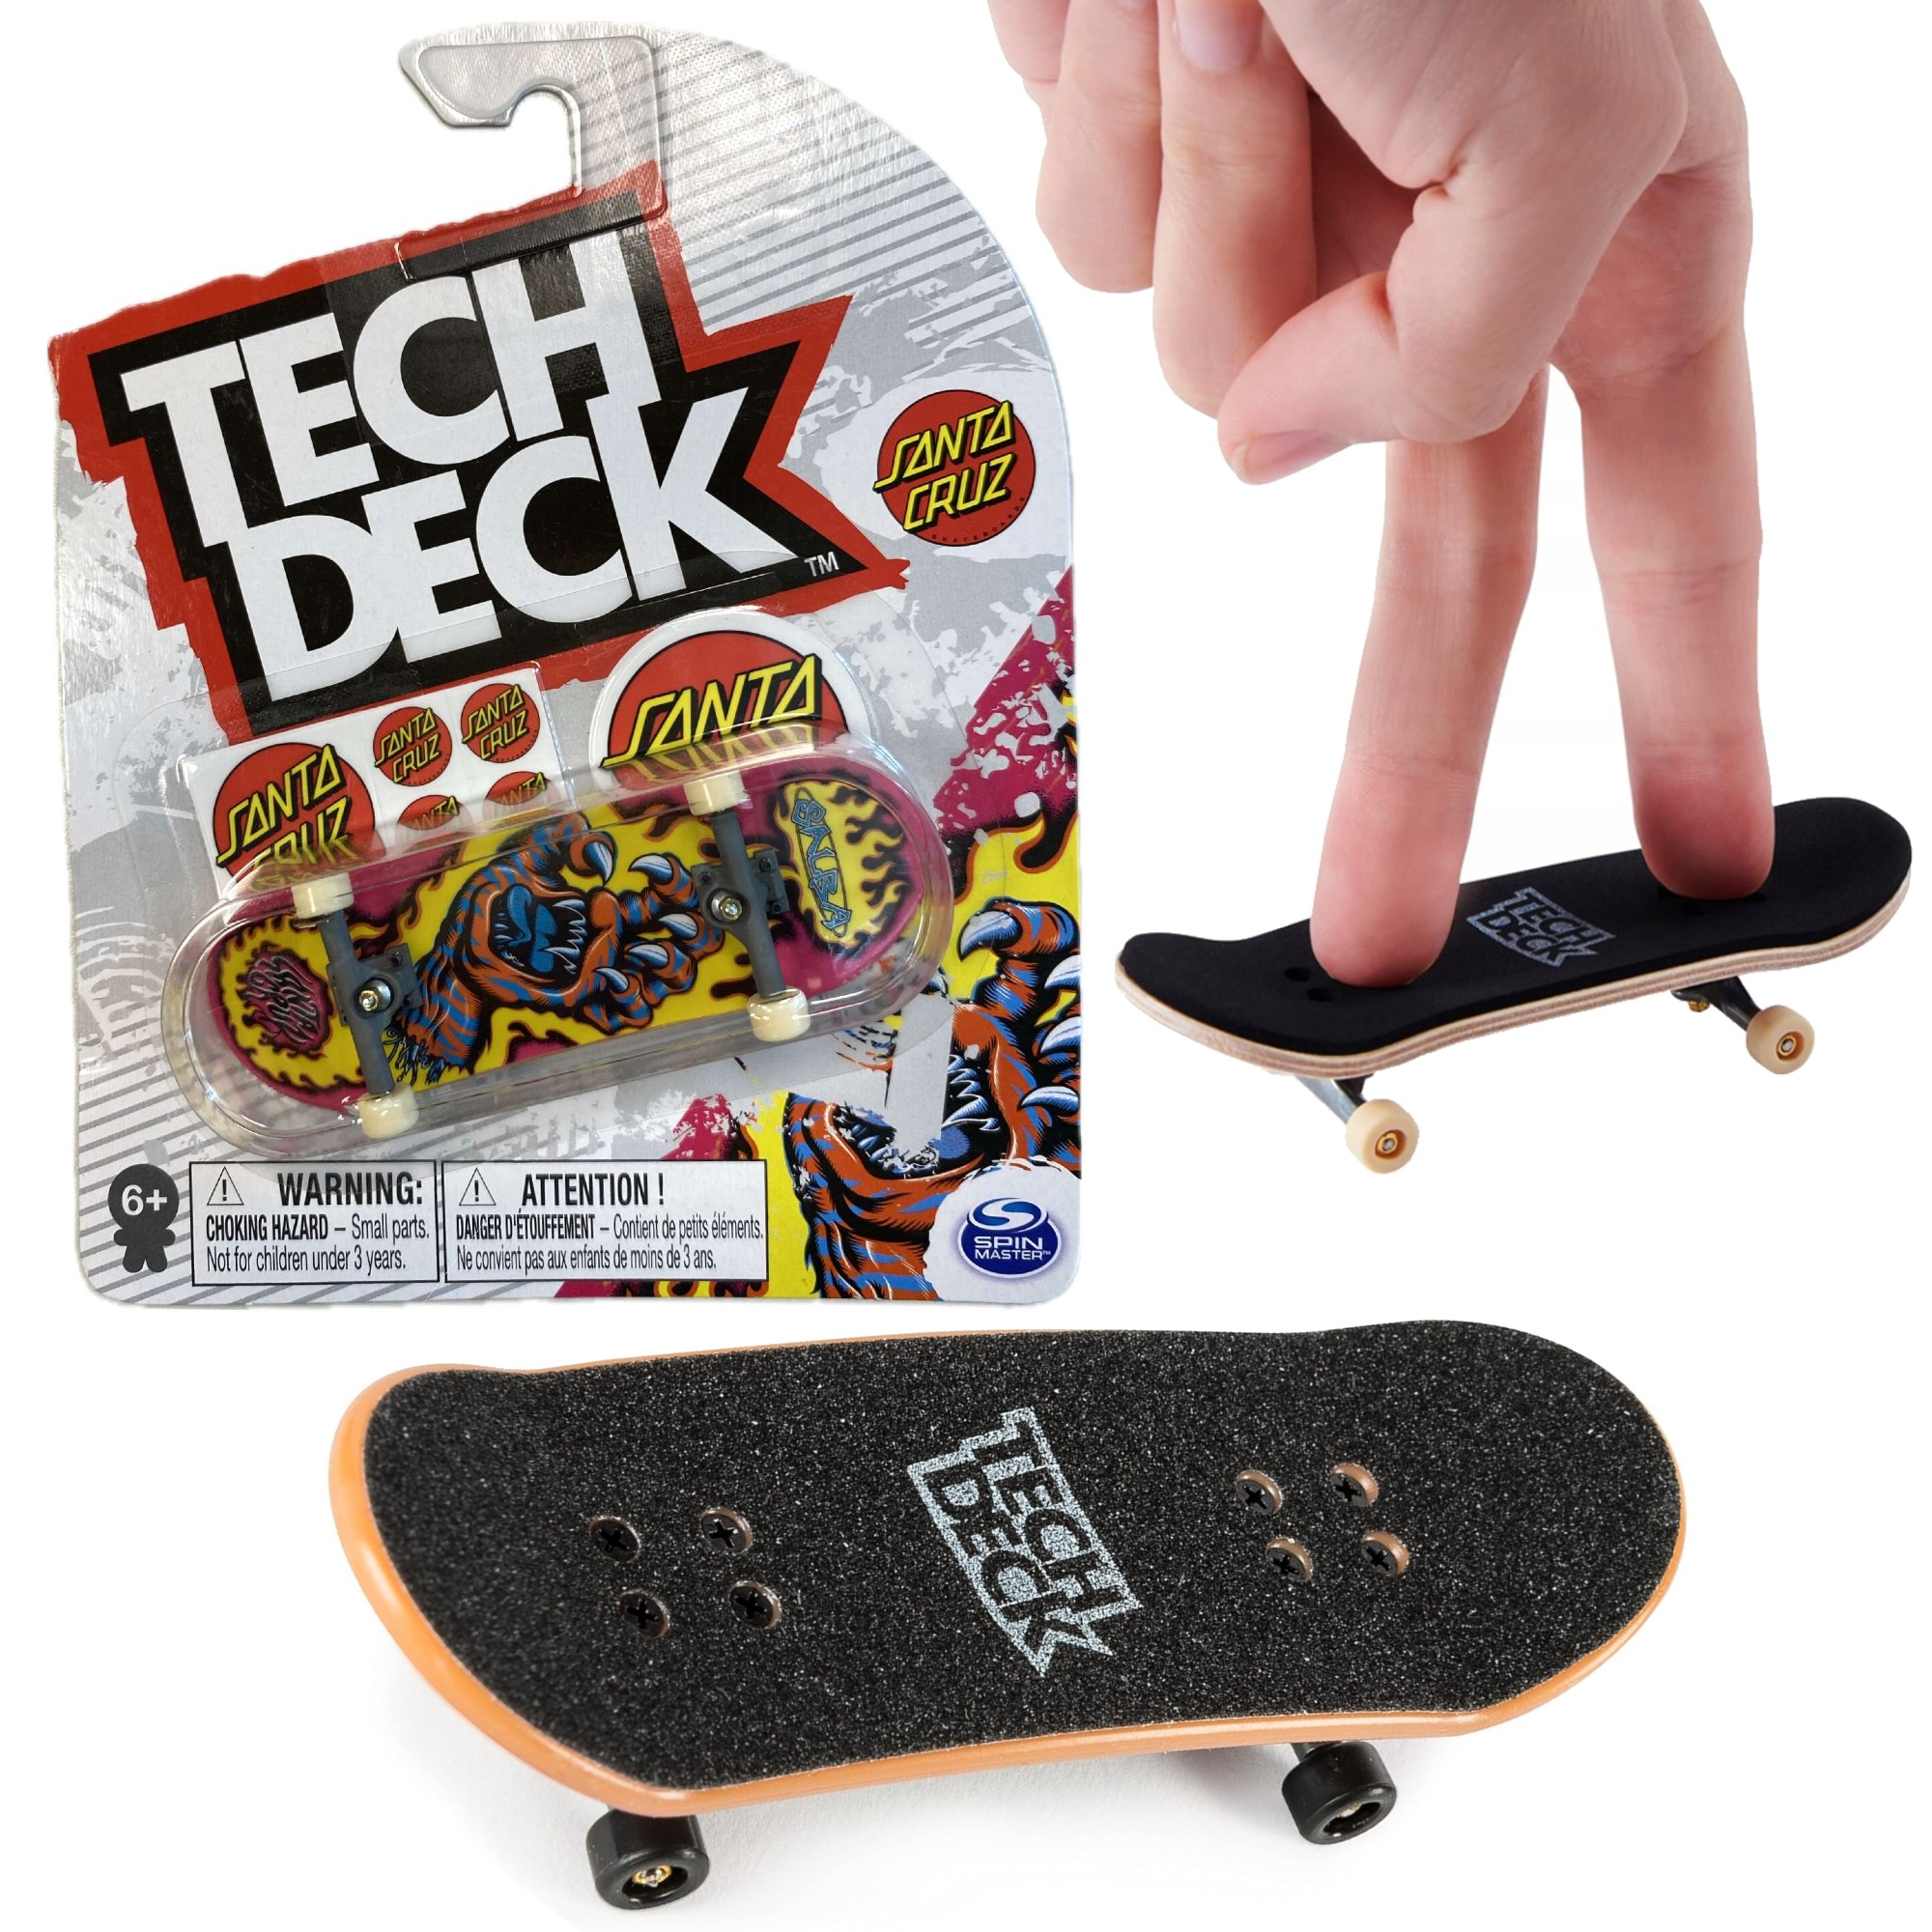 Tech Deck deskorolka fingerboard Santa Cruz Salba + naklejki